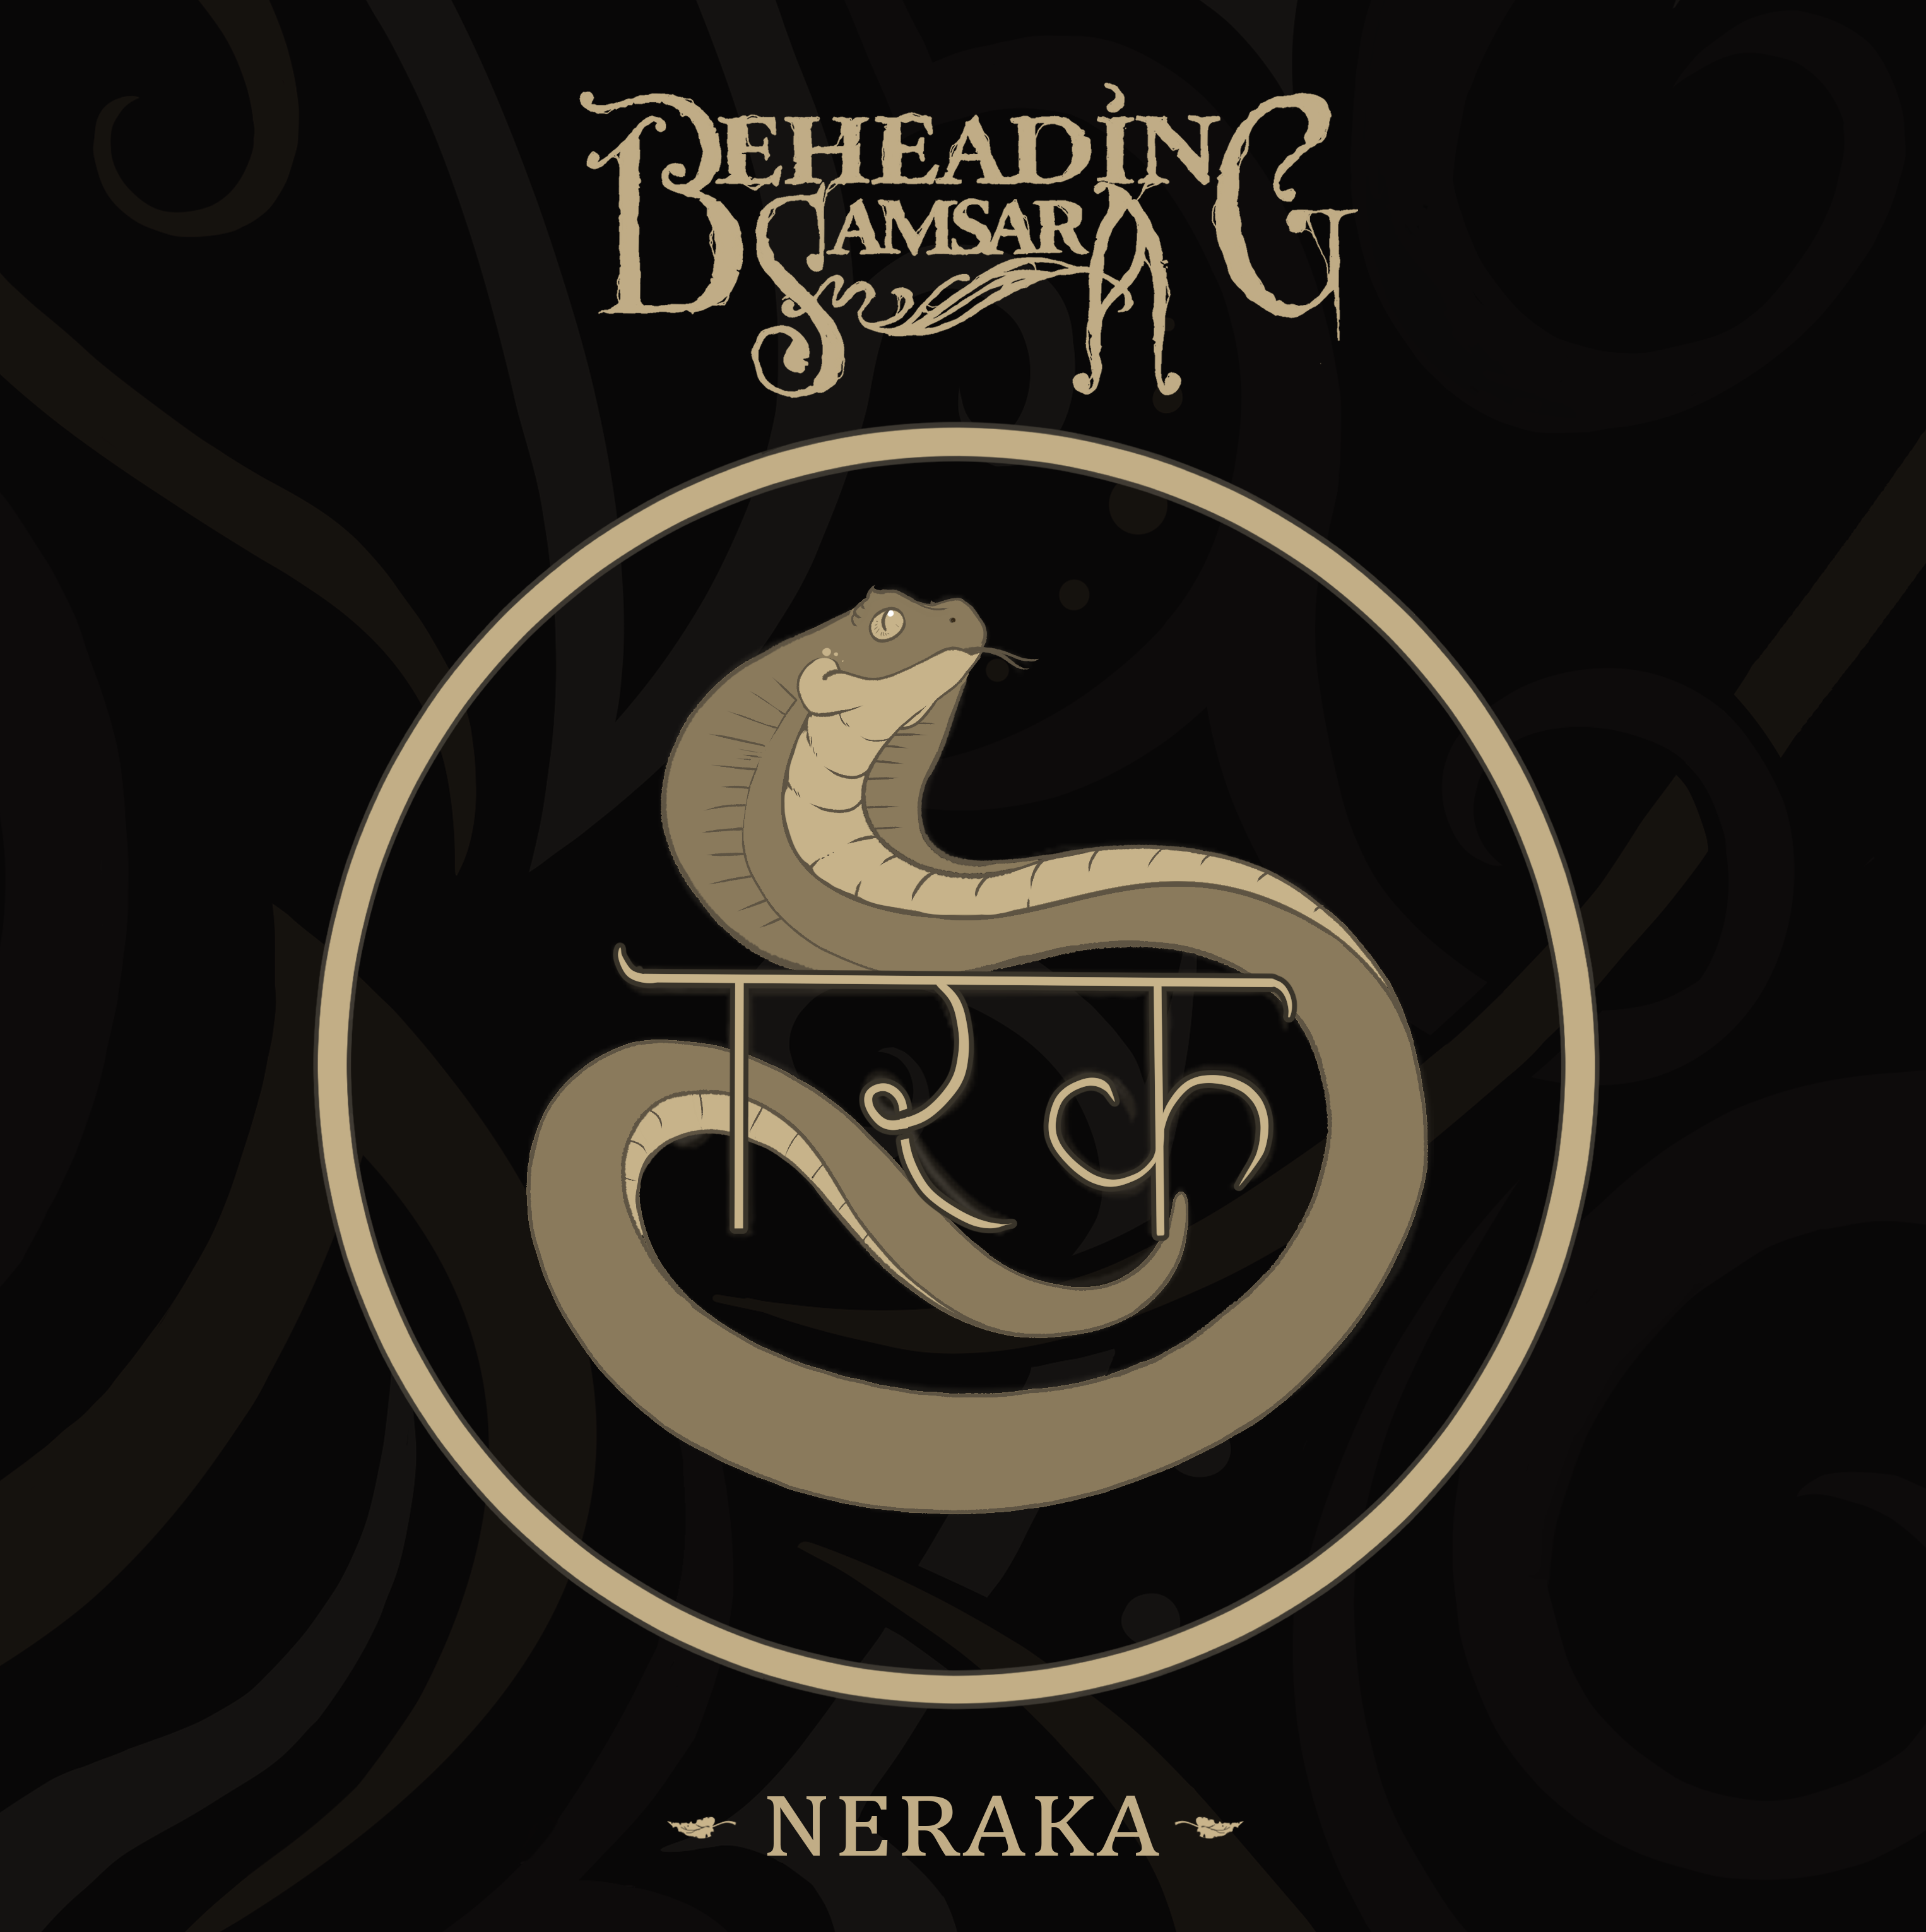 Beheading Samsara: Nuevo single “Neraka”